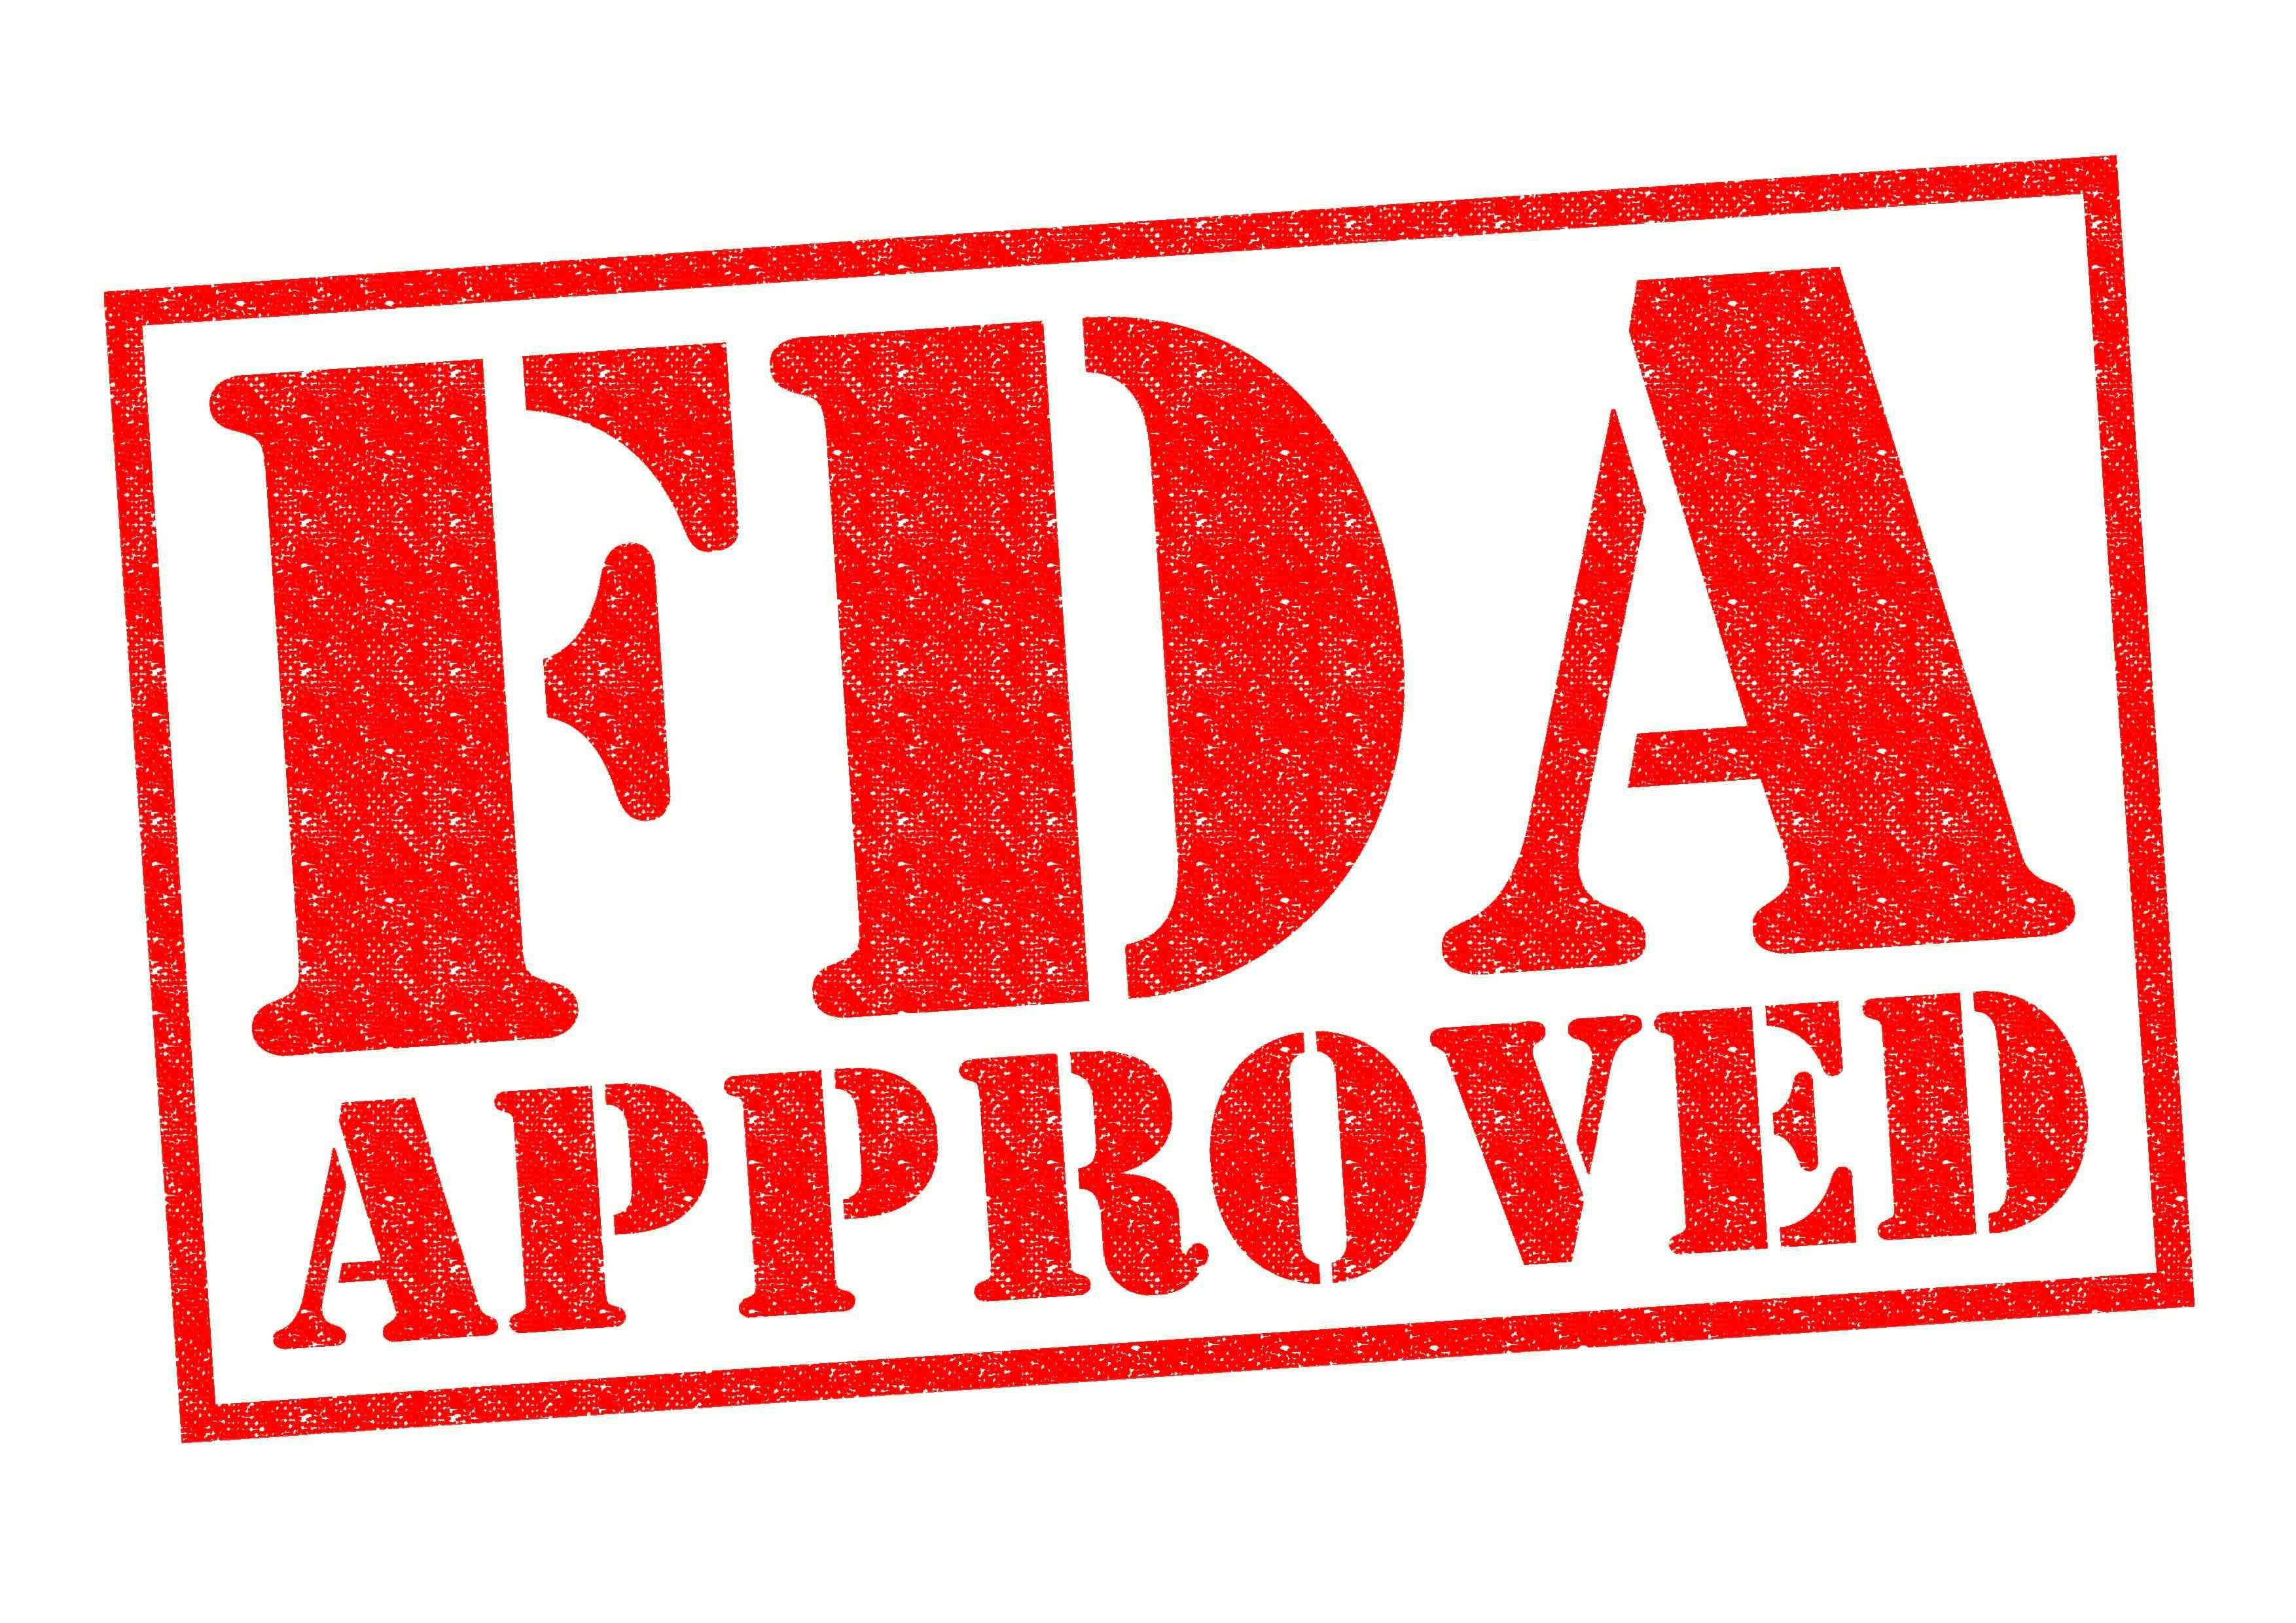 FDA approval stamp in red